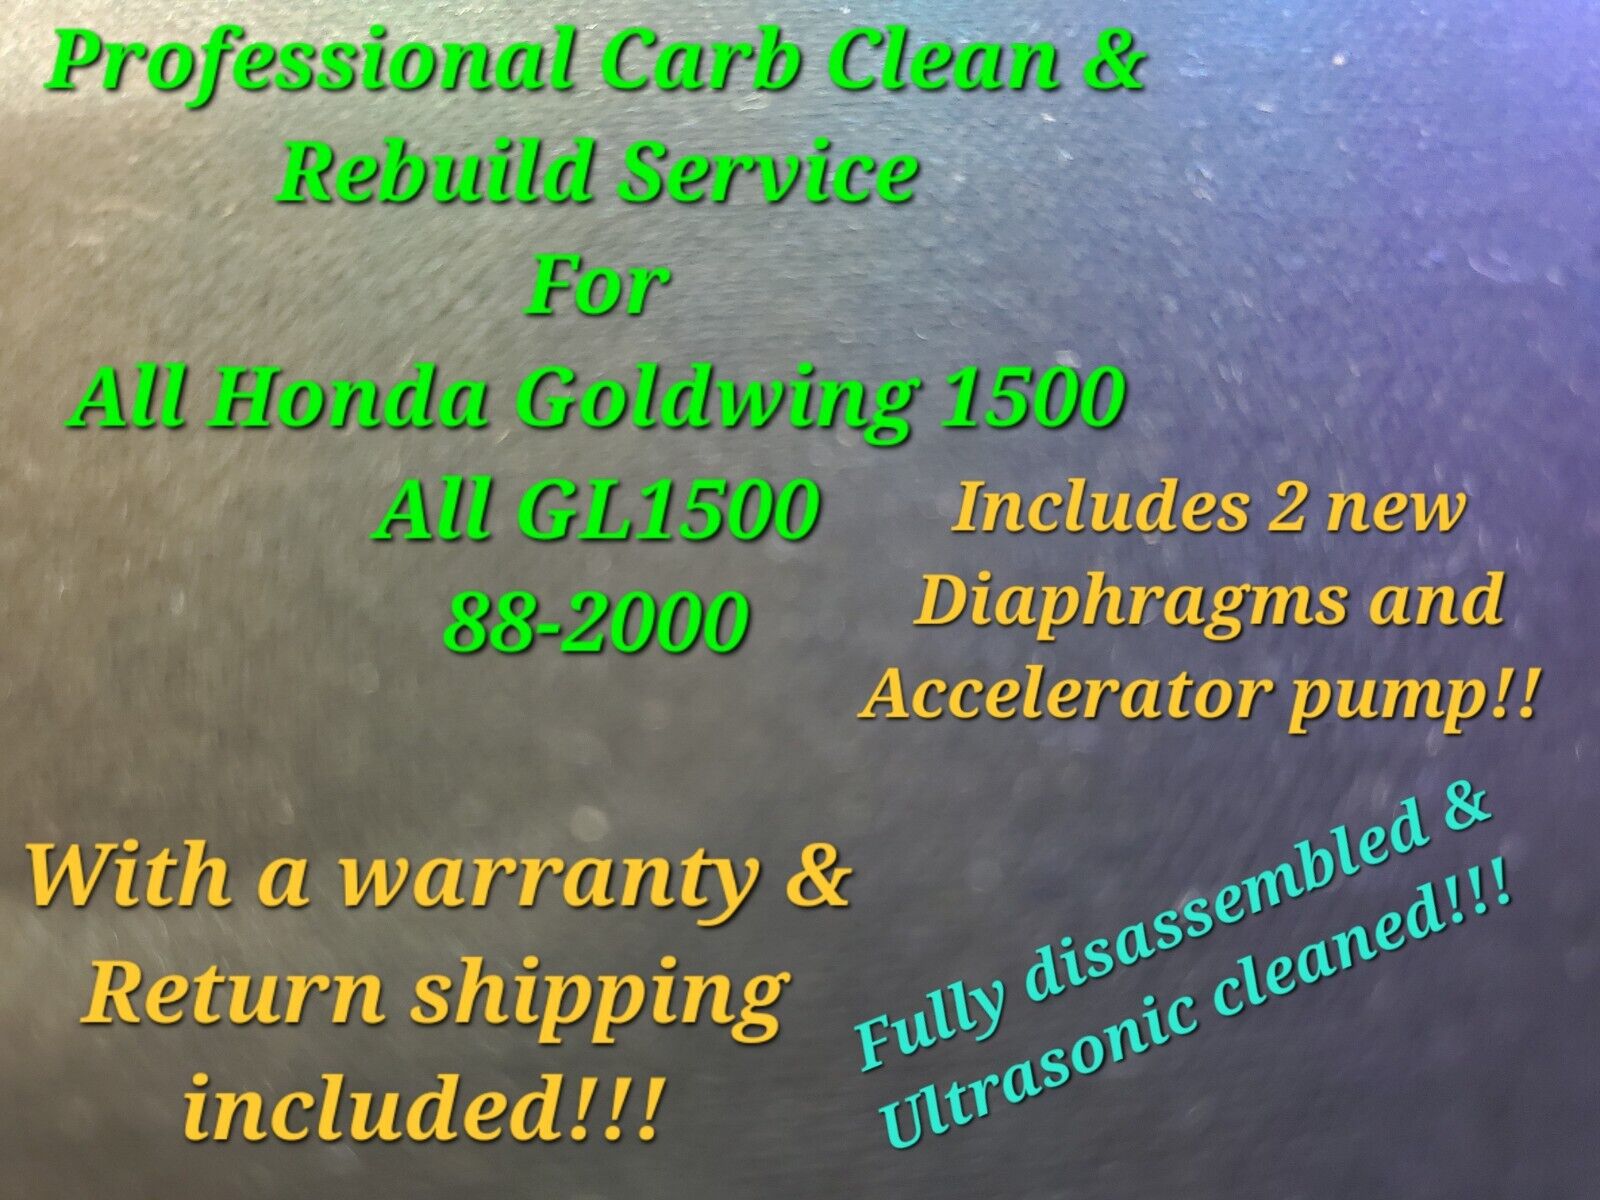 88-2000 Honda Goldwing 1500 COMPLETE Carb Clean & Rebuild Service GL1500 